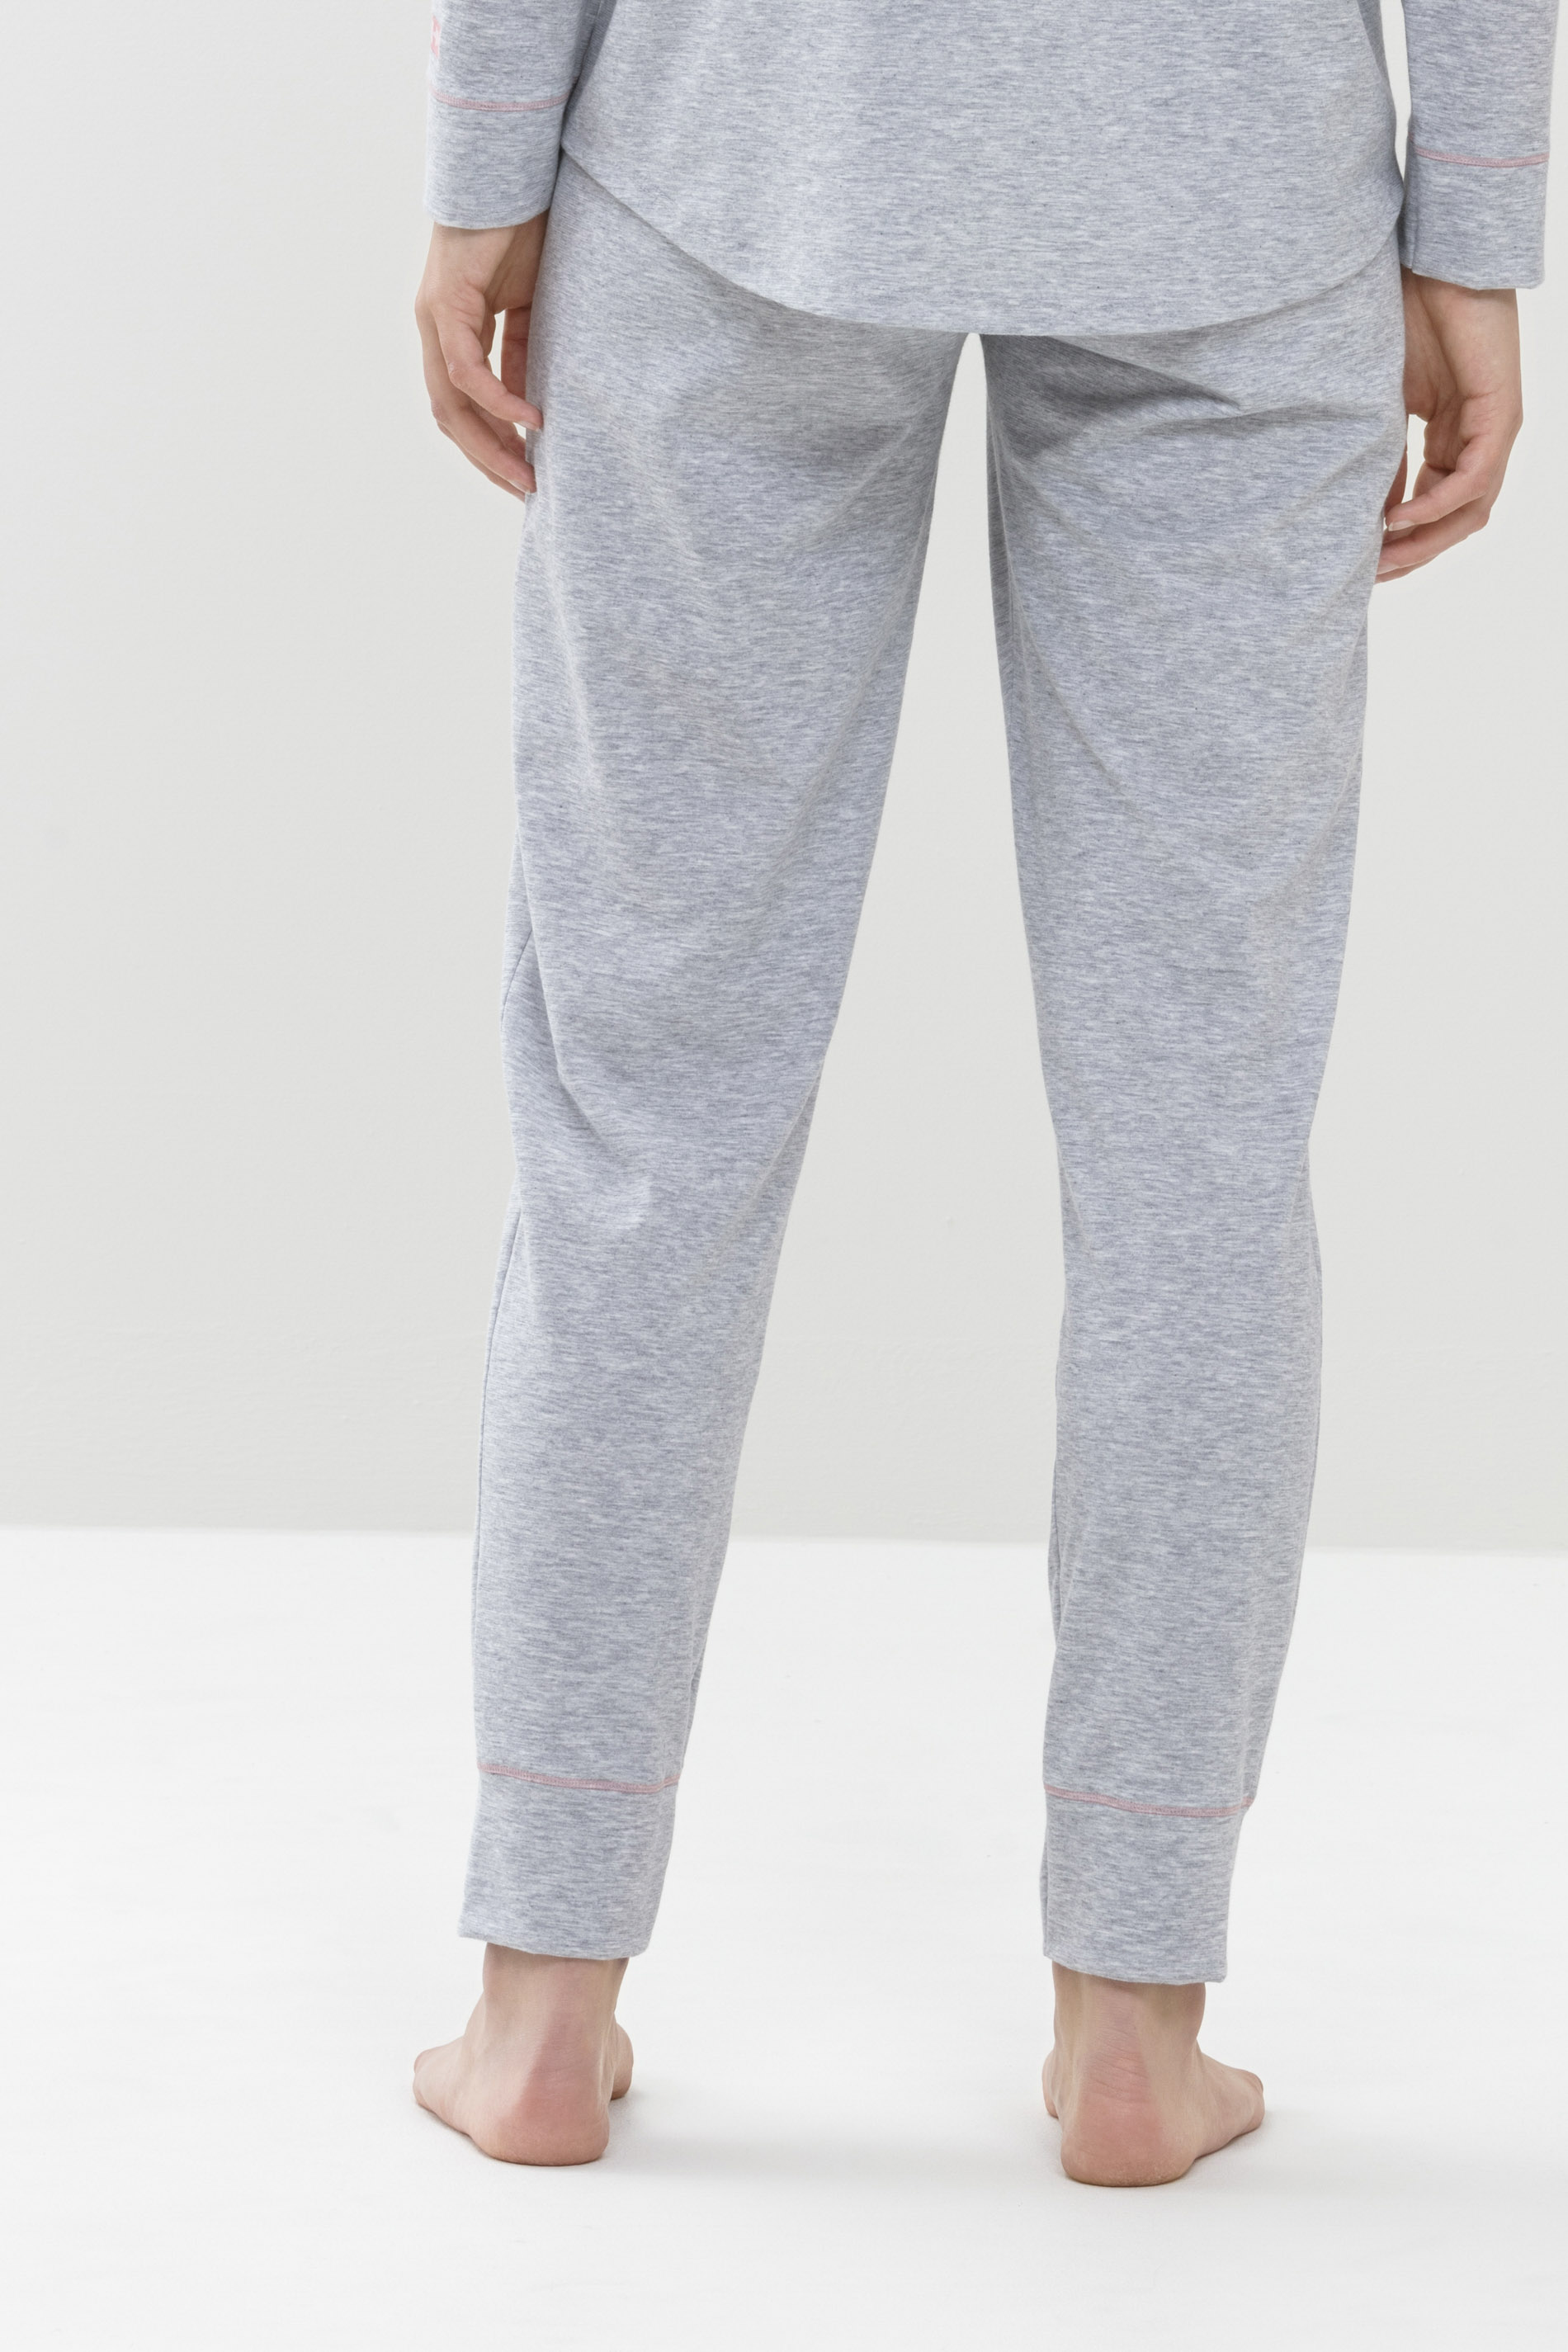 Broek lang Stone Grey Melange Serie Zzzleepwear Achteraanzicht | mey®